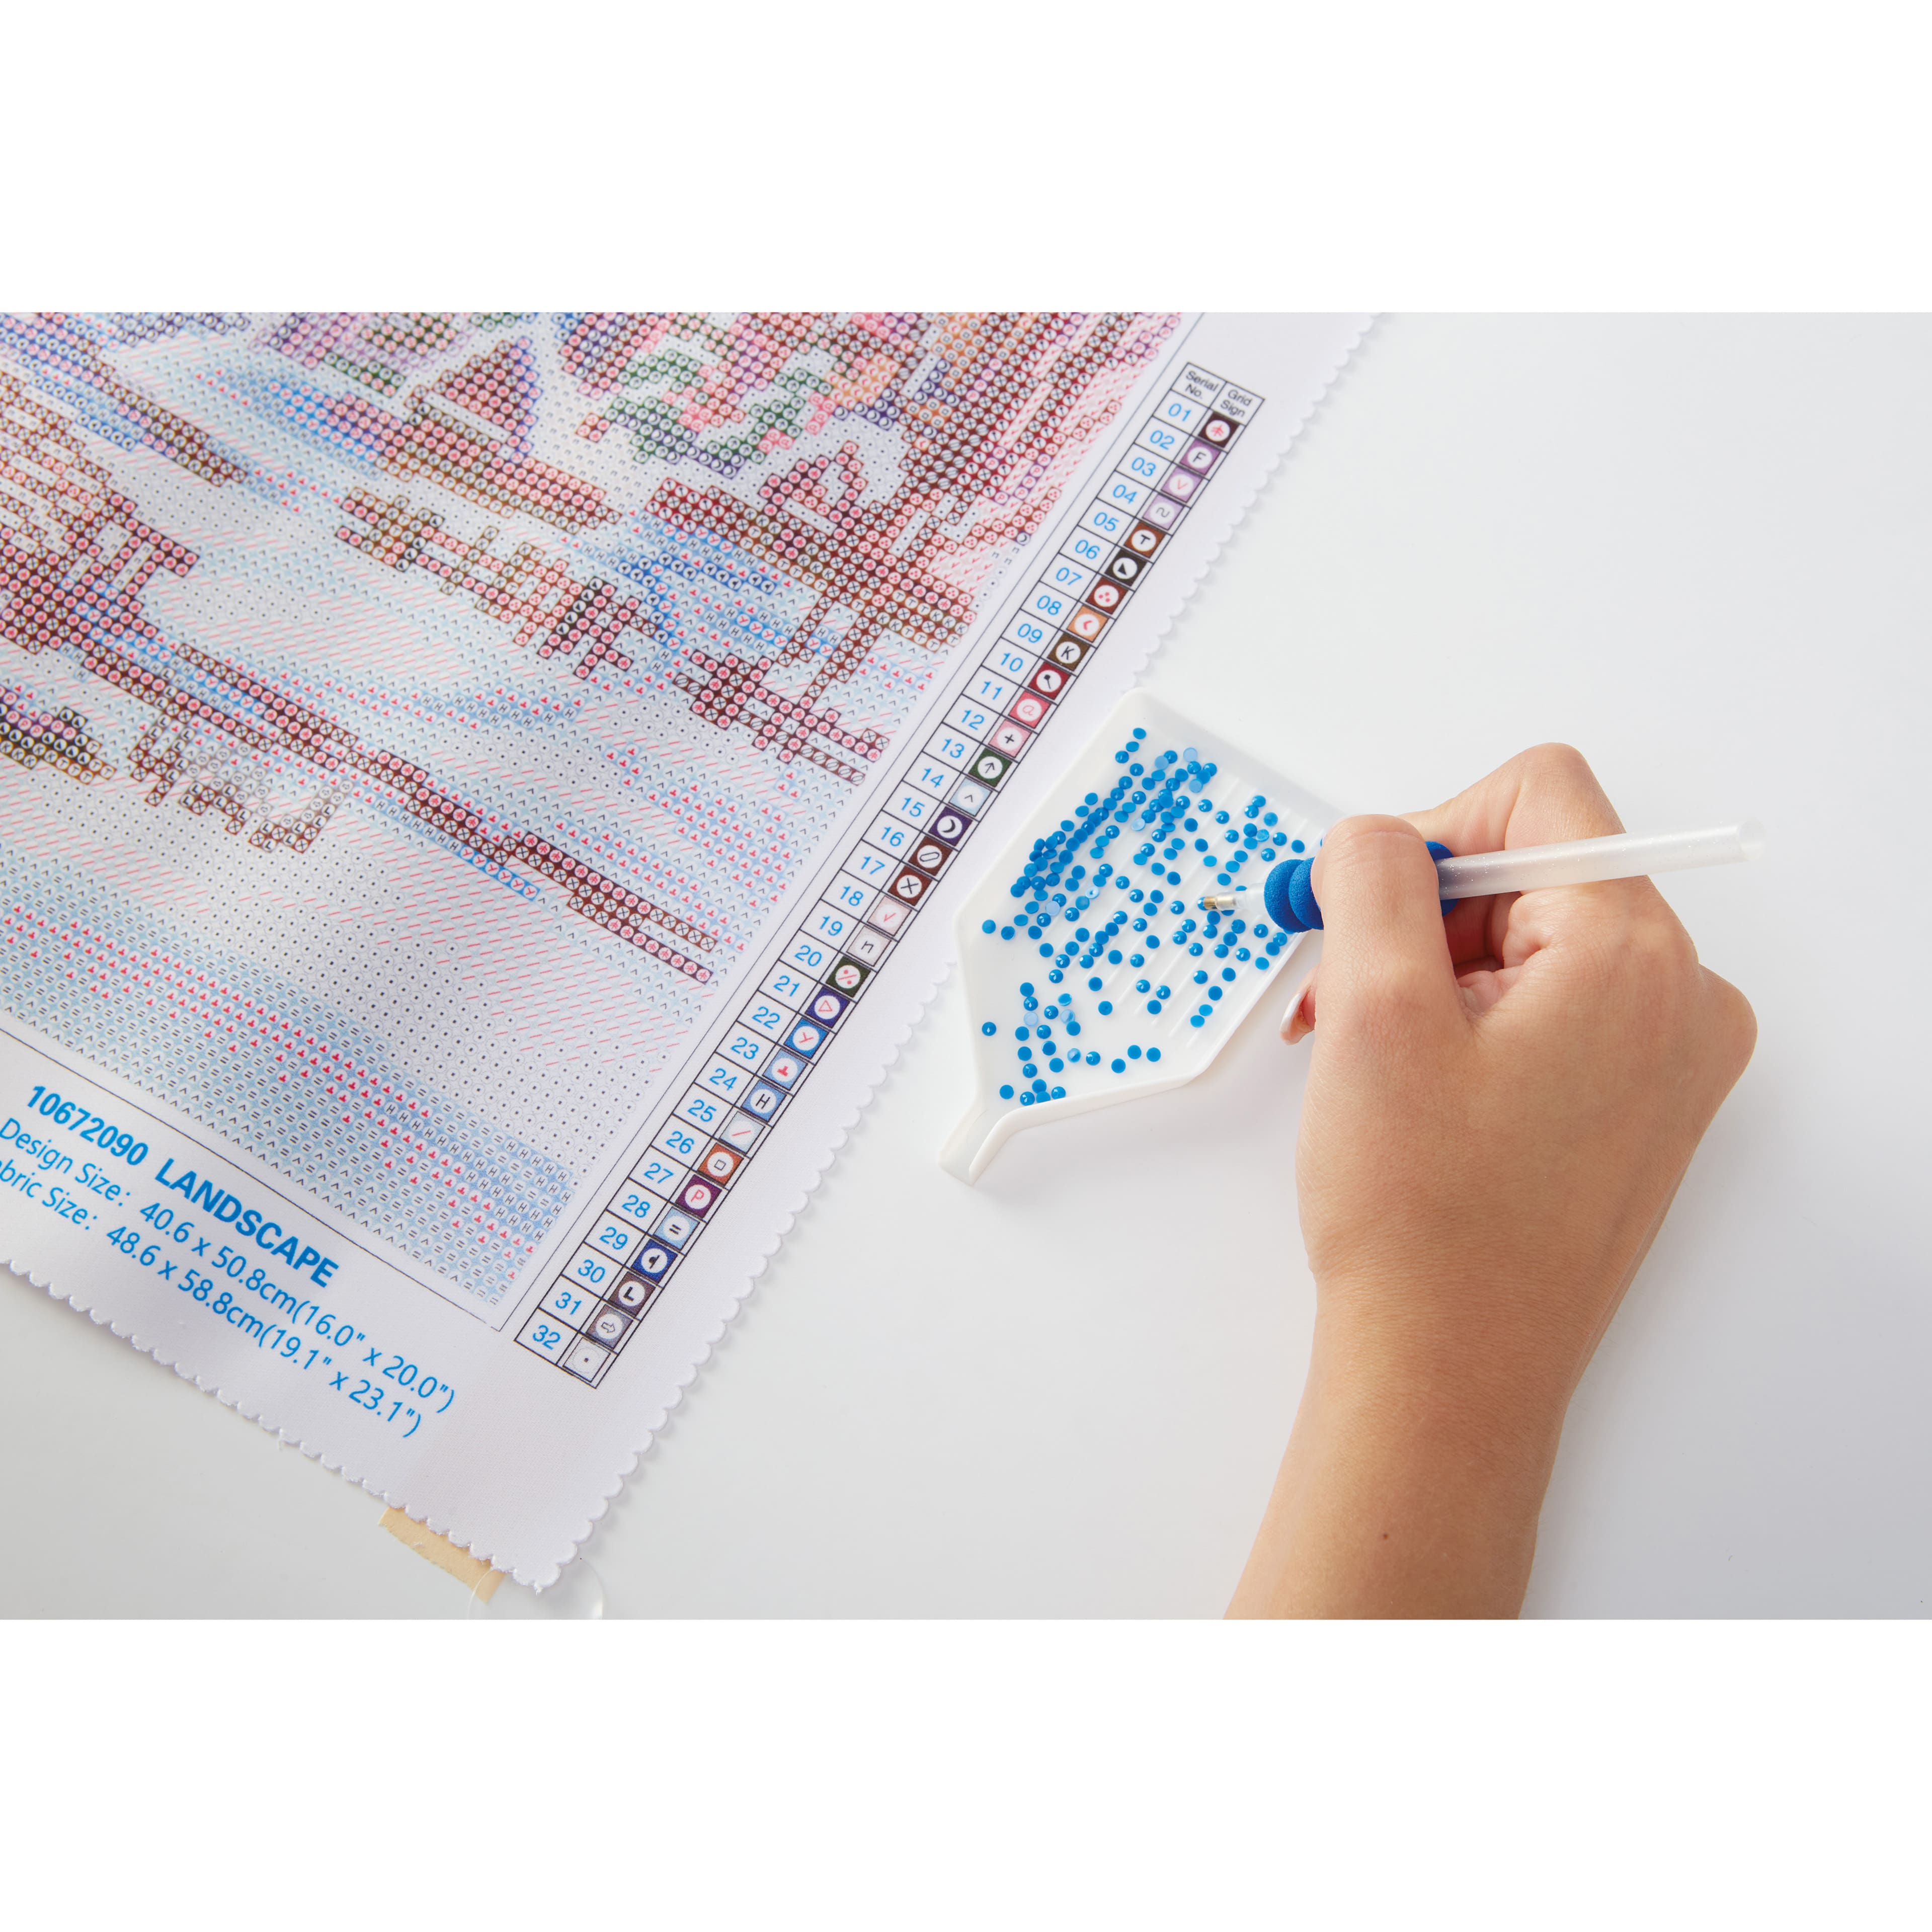 Floral Diamond Art Kit by Make Market Paint | 11.2 x 9.2 | Michaels